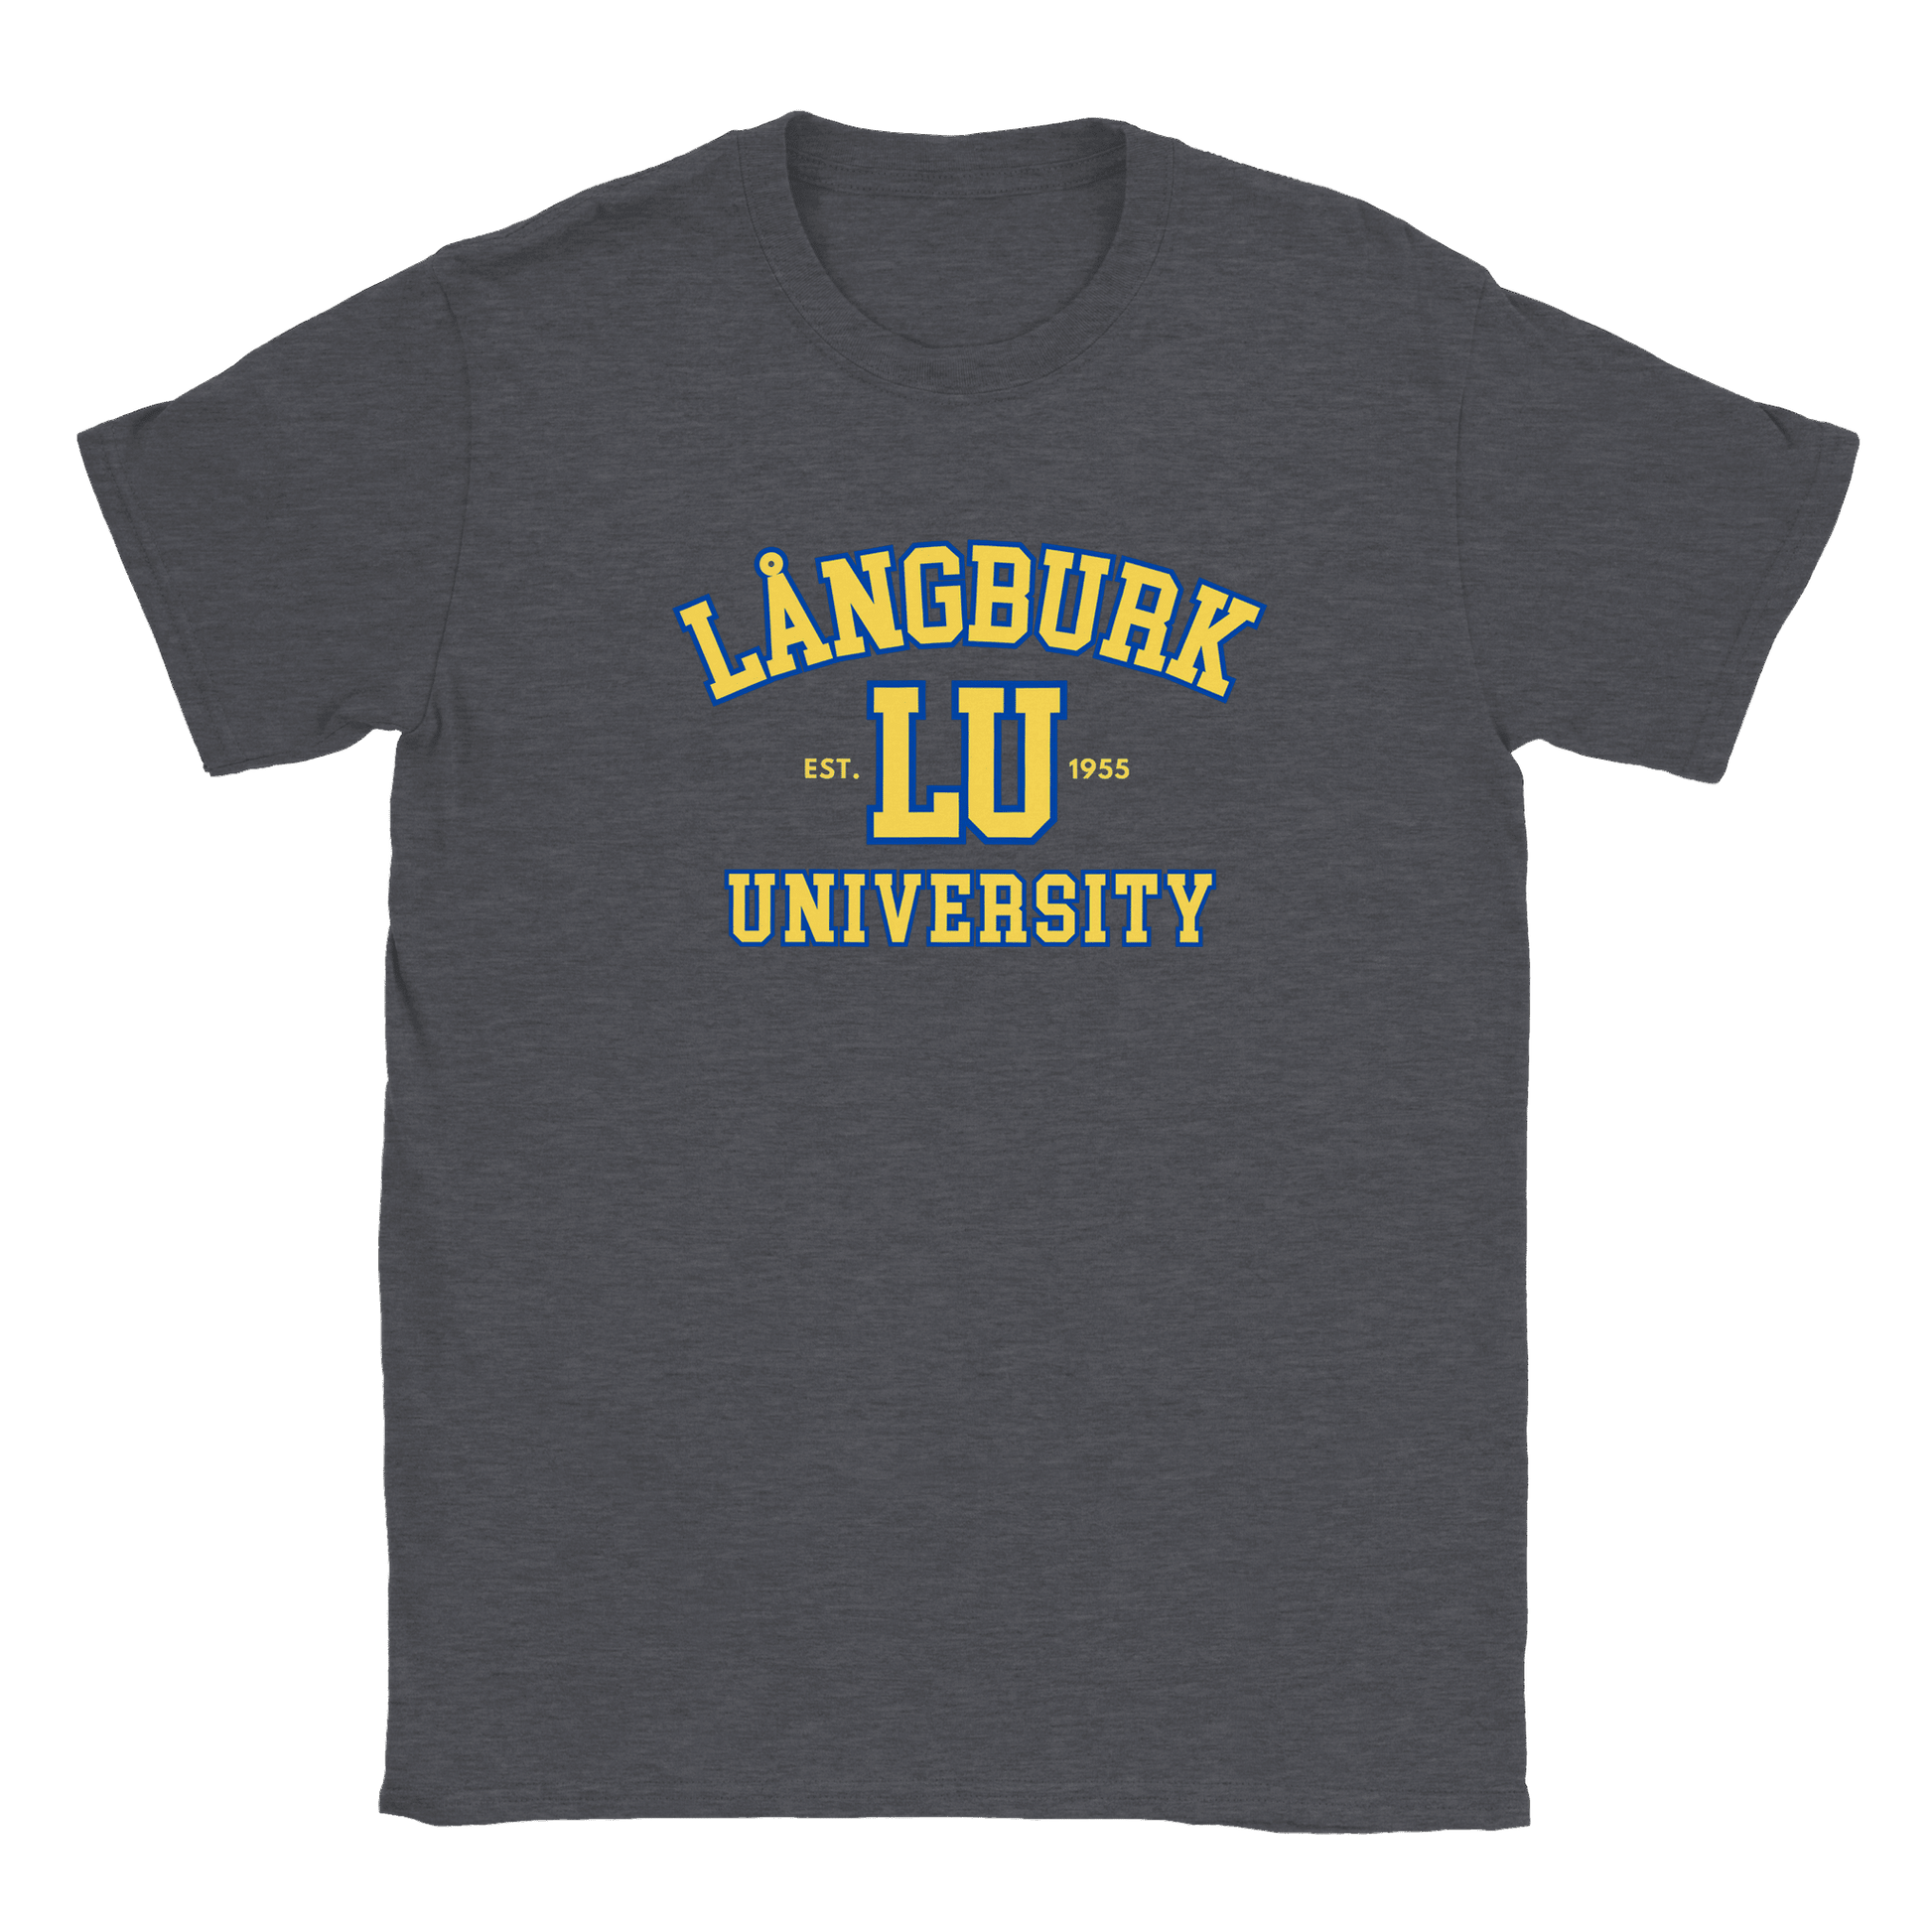 Långburk University - T-shirt Mörk Ljung